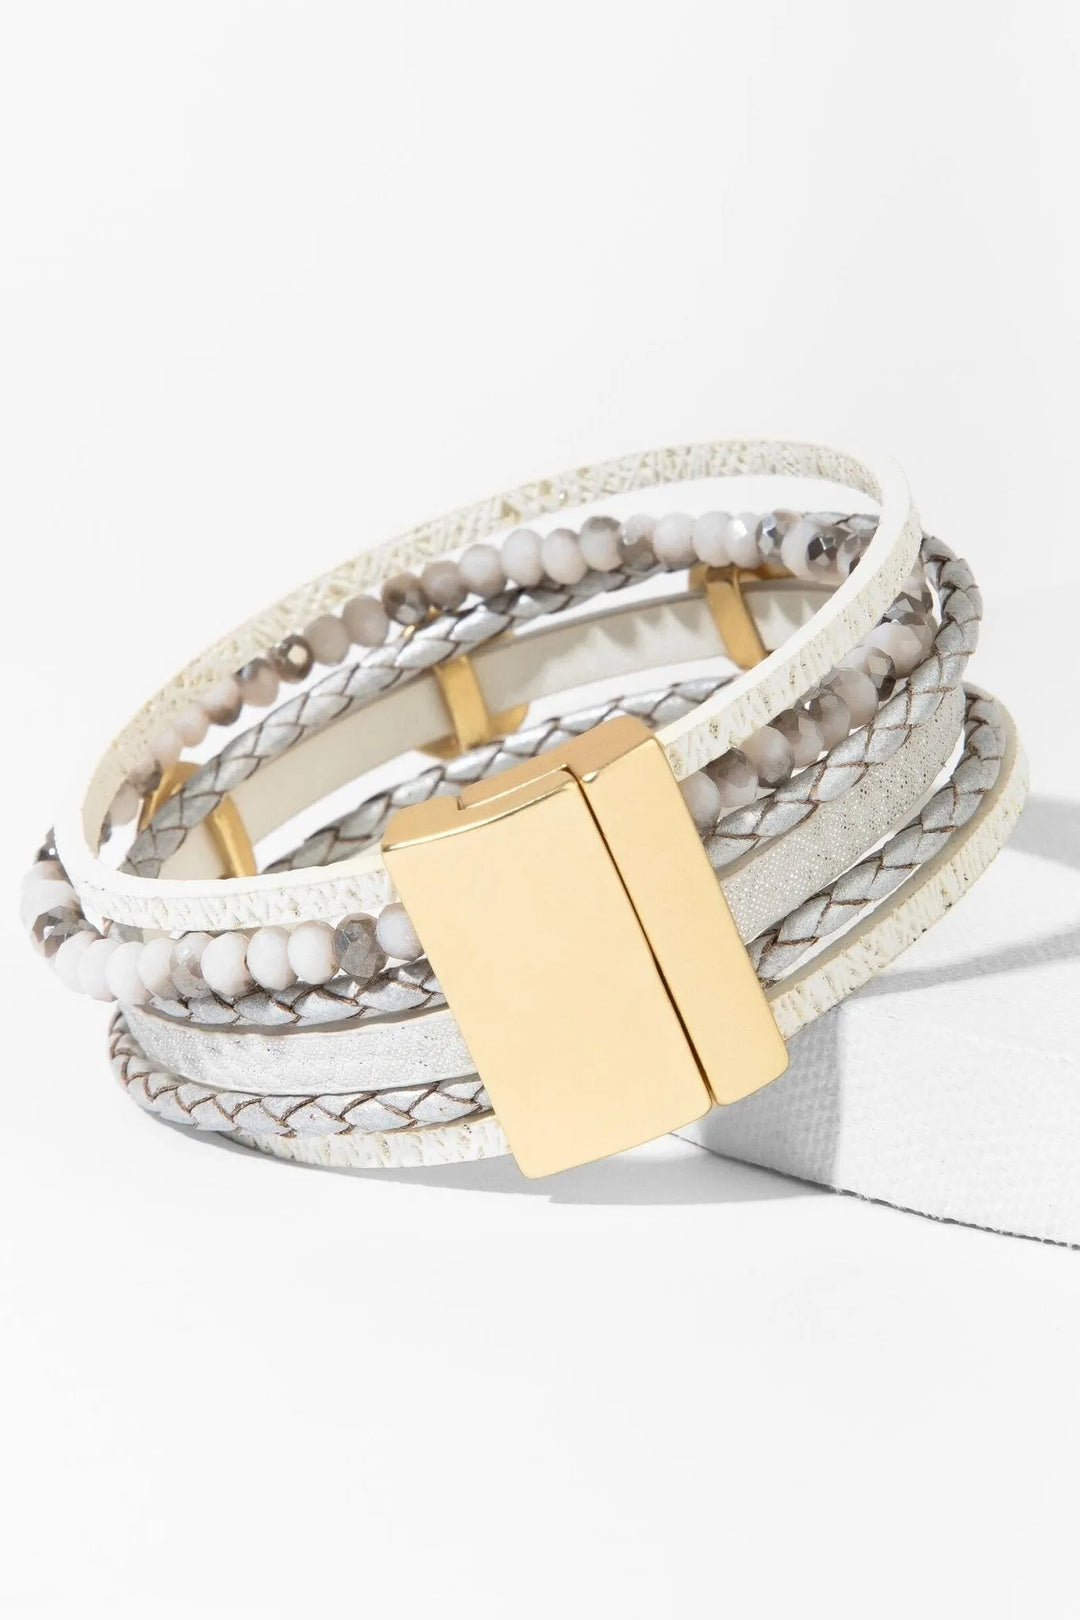 WestMoon Multi Strand Leather Bracelet White